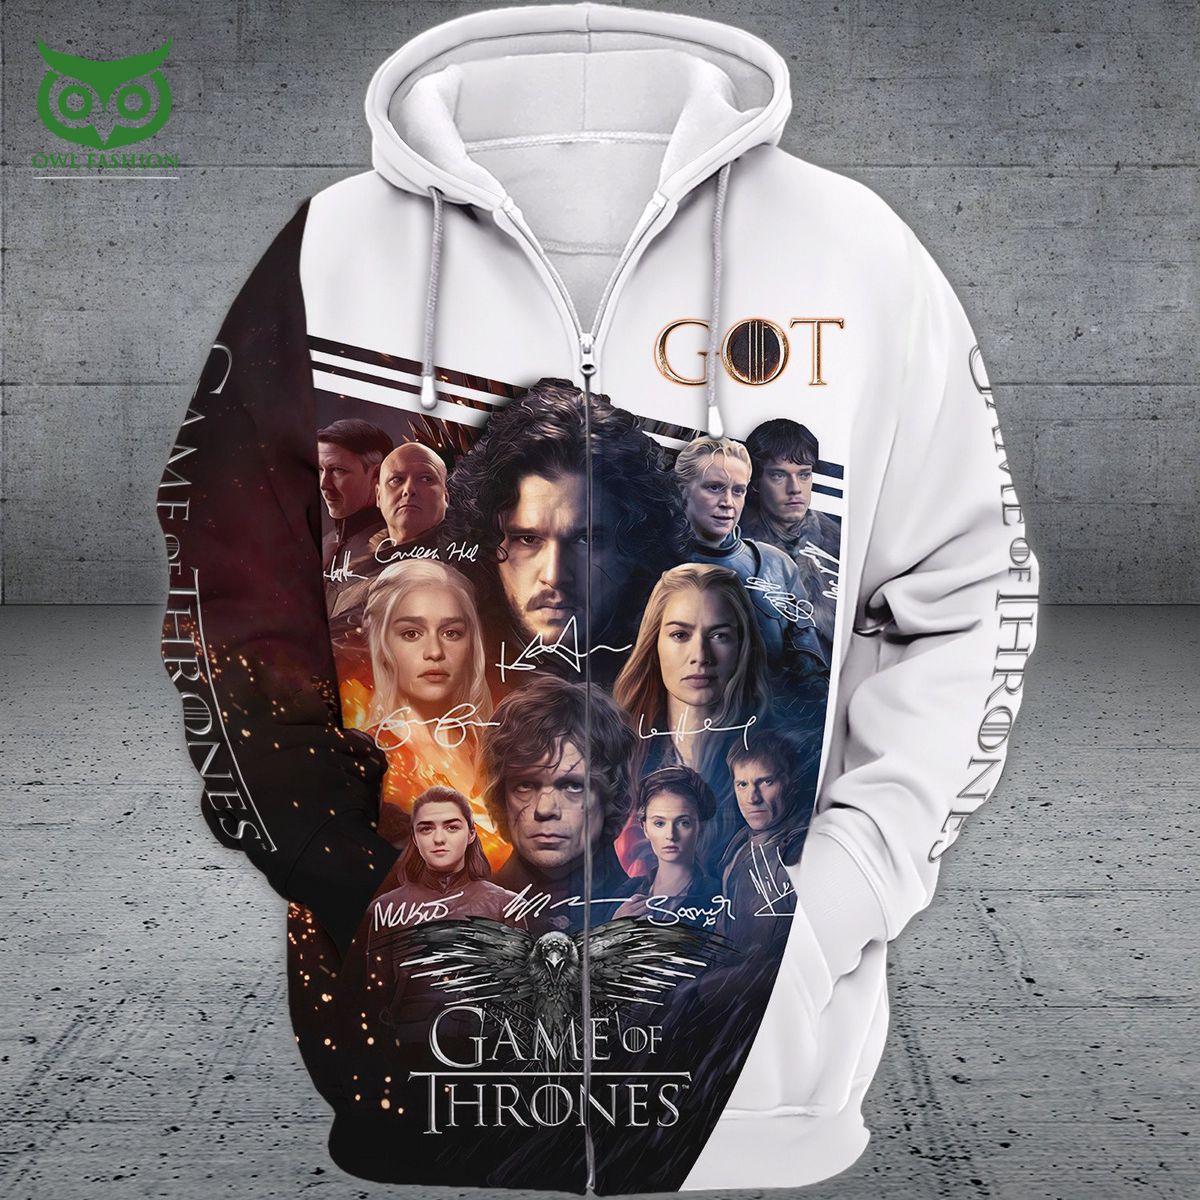 game of thrones poster got 3d tshirt zipper hoodie 1 DV1Ff